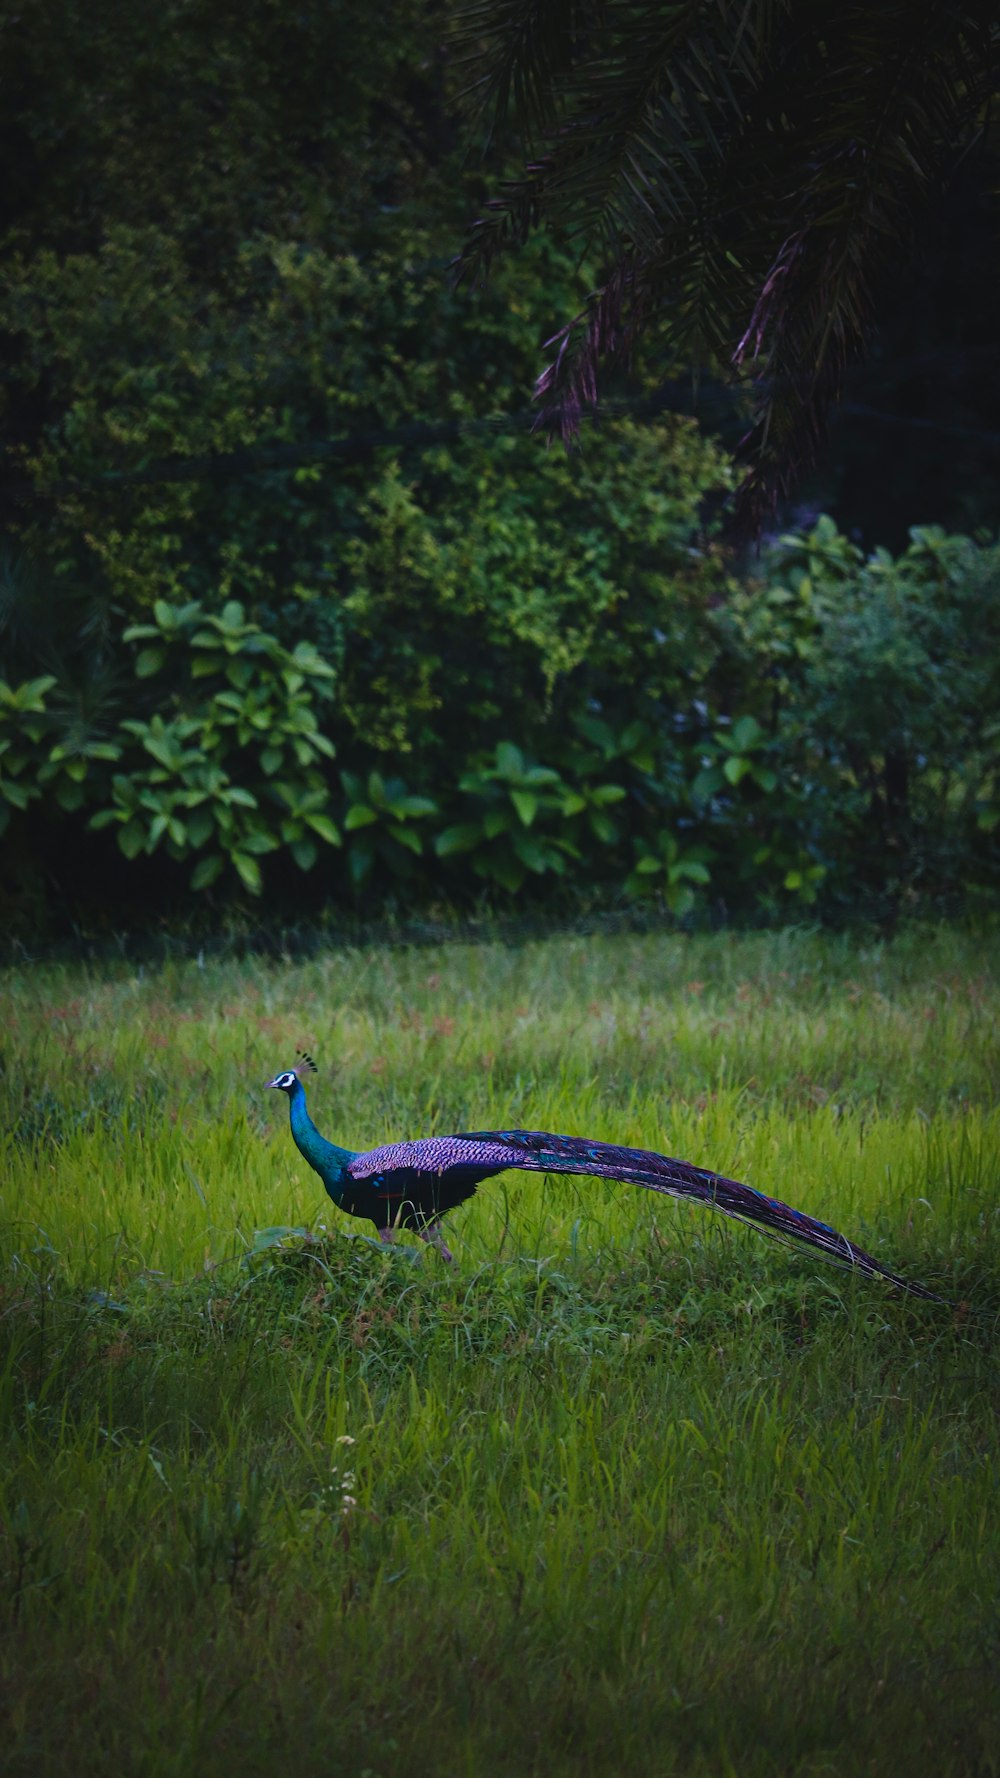 a peacock in a grassy area